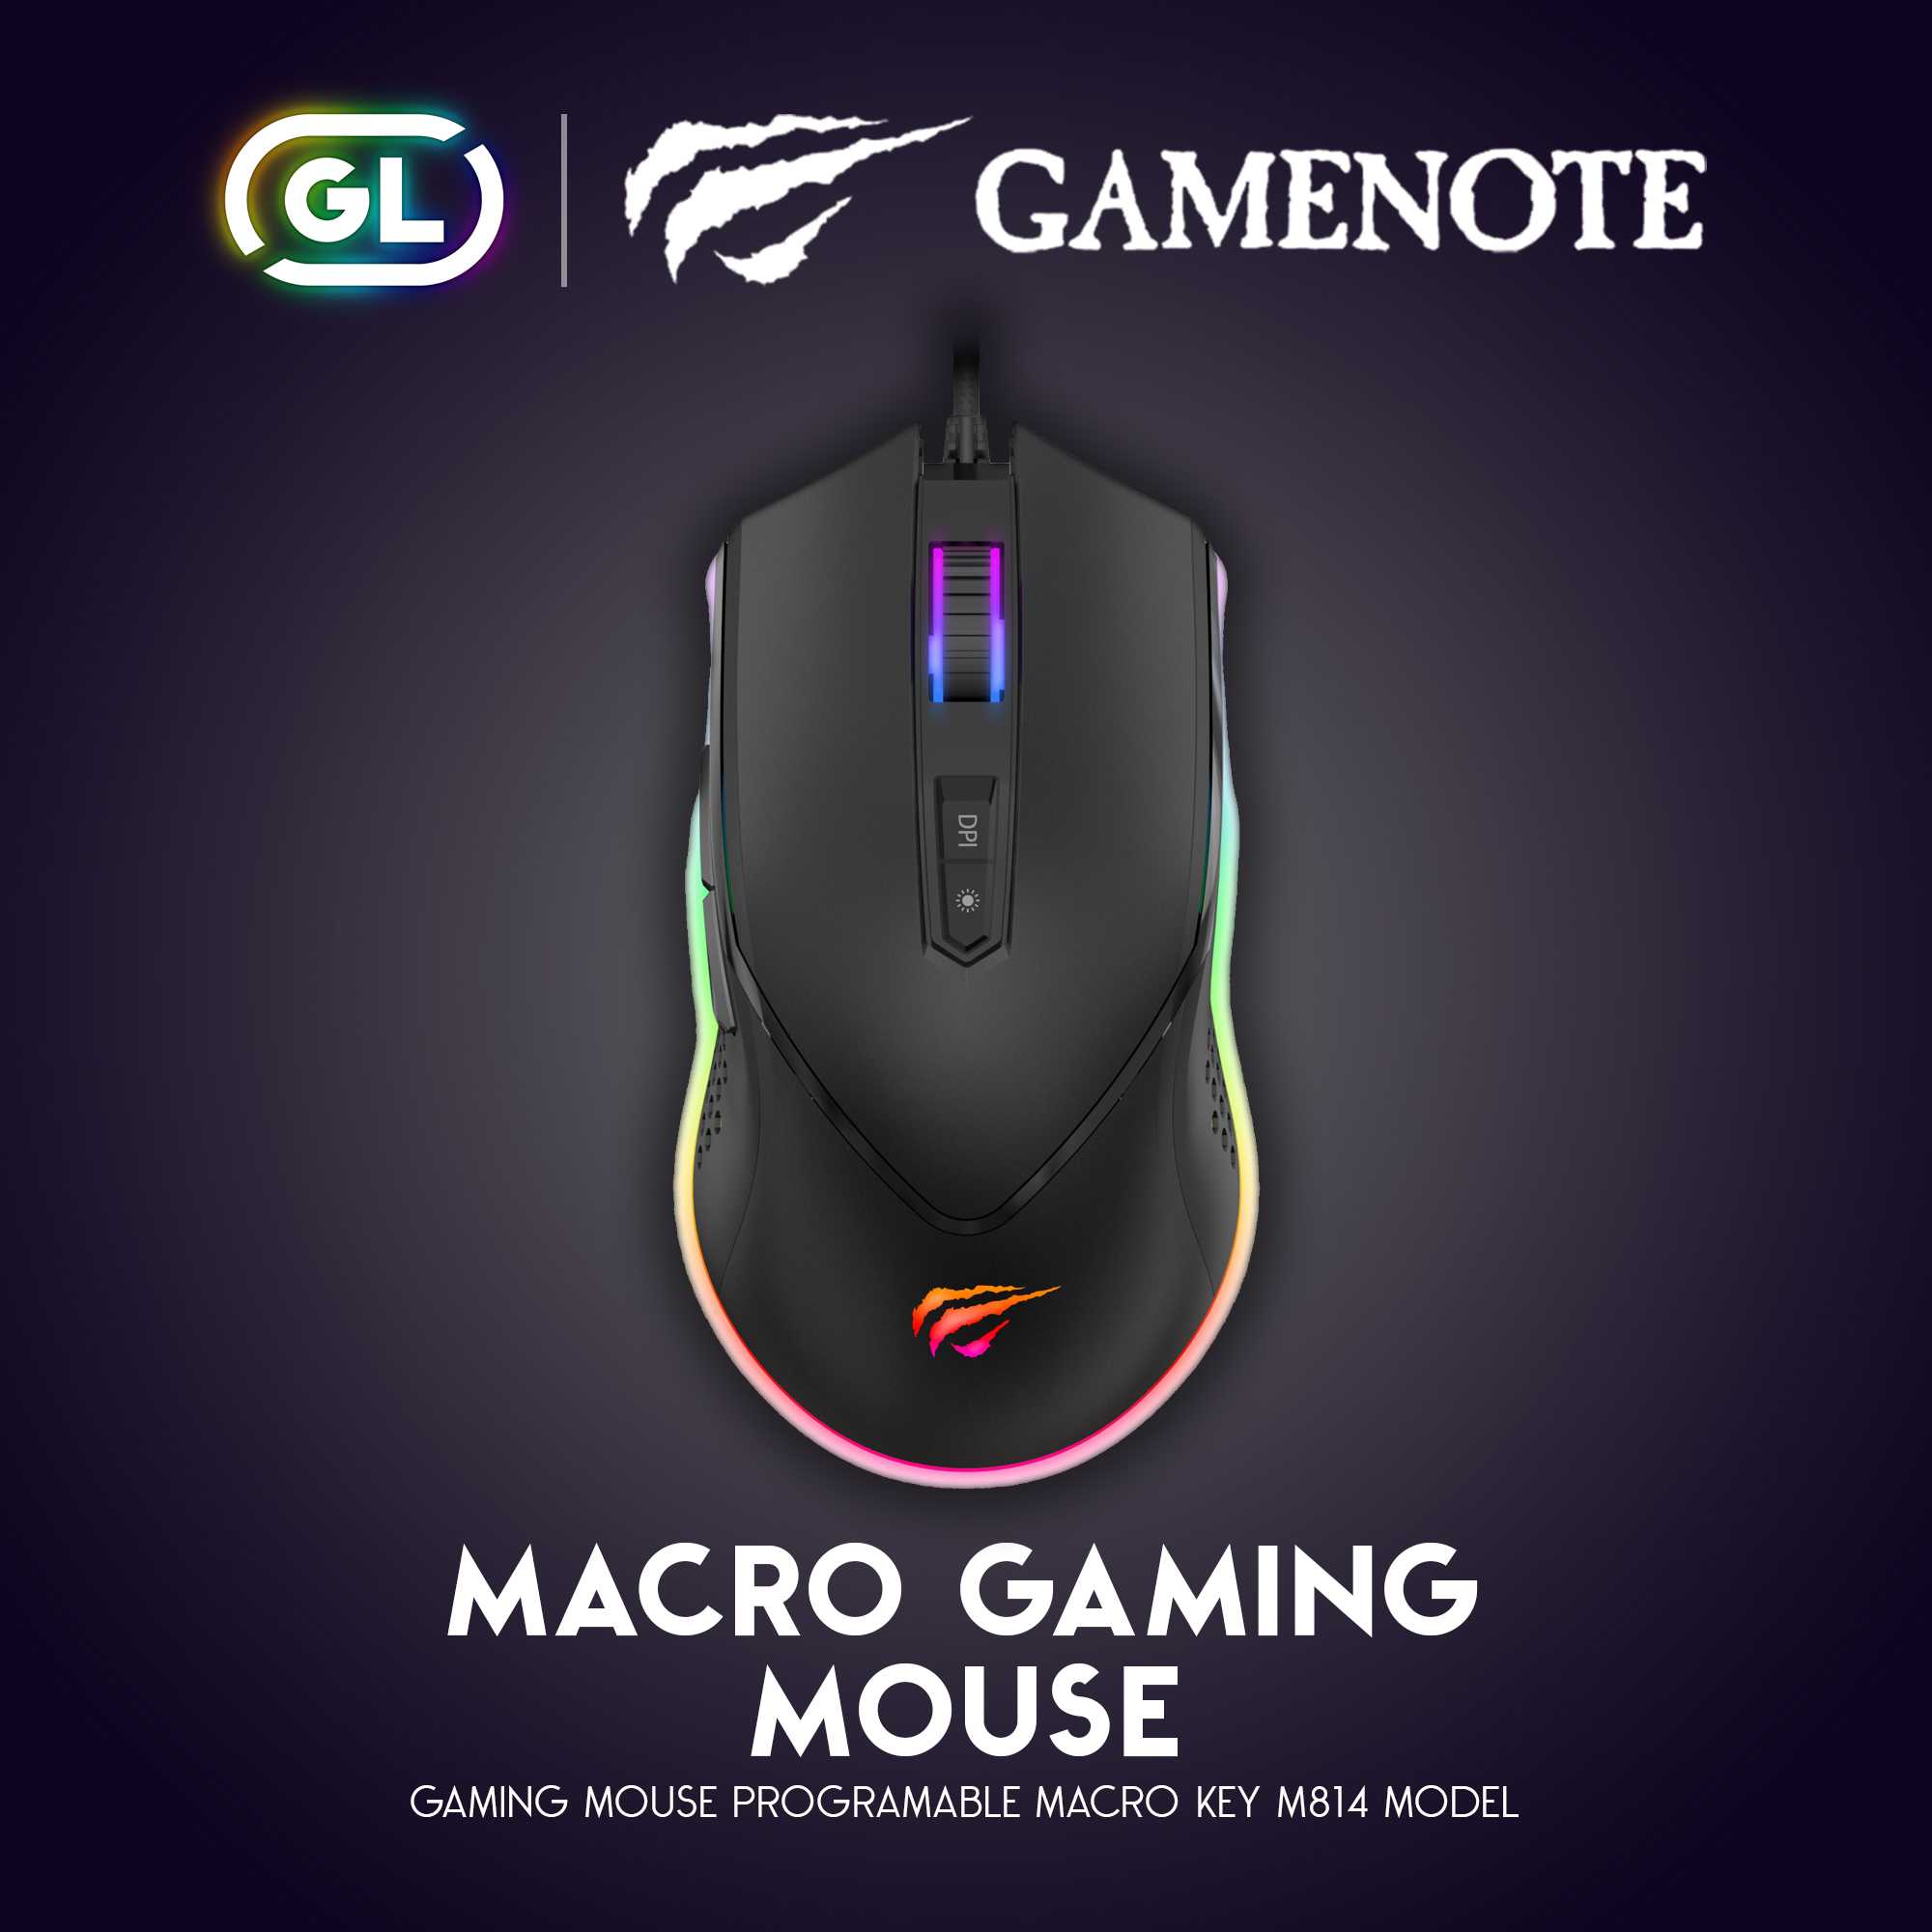 Gamenote mouse gaming RGB เมาส์เกมมิ่ง mouse macro 7 Key ไฟ RGB  Backlit GM814 havit 1000-7000 DPI